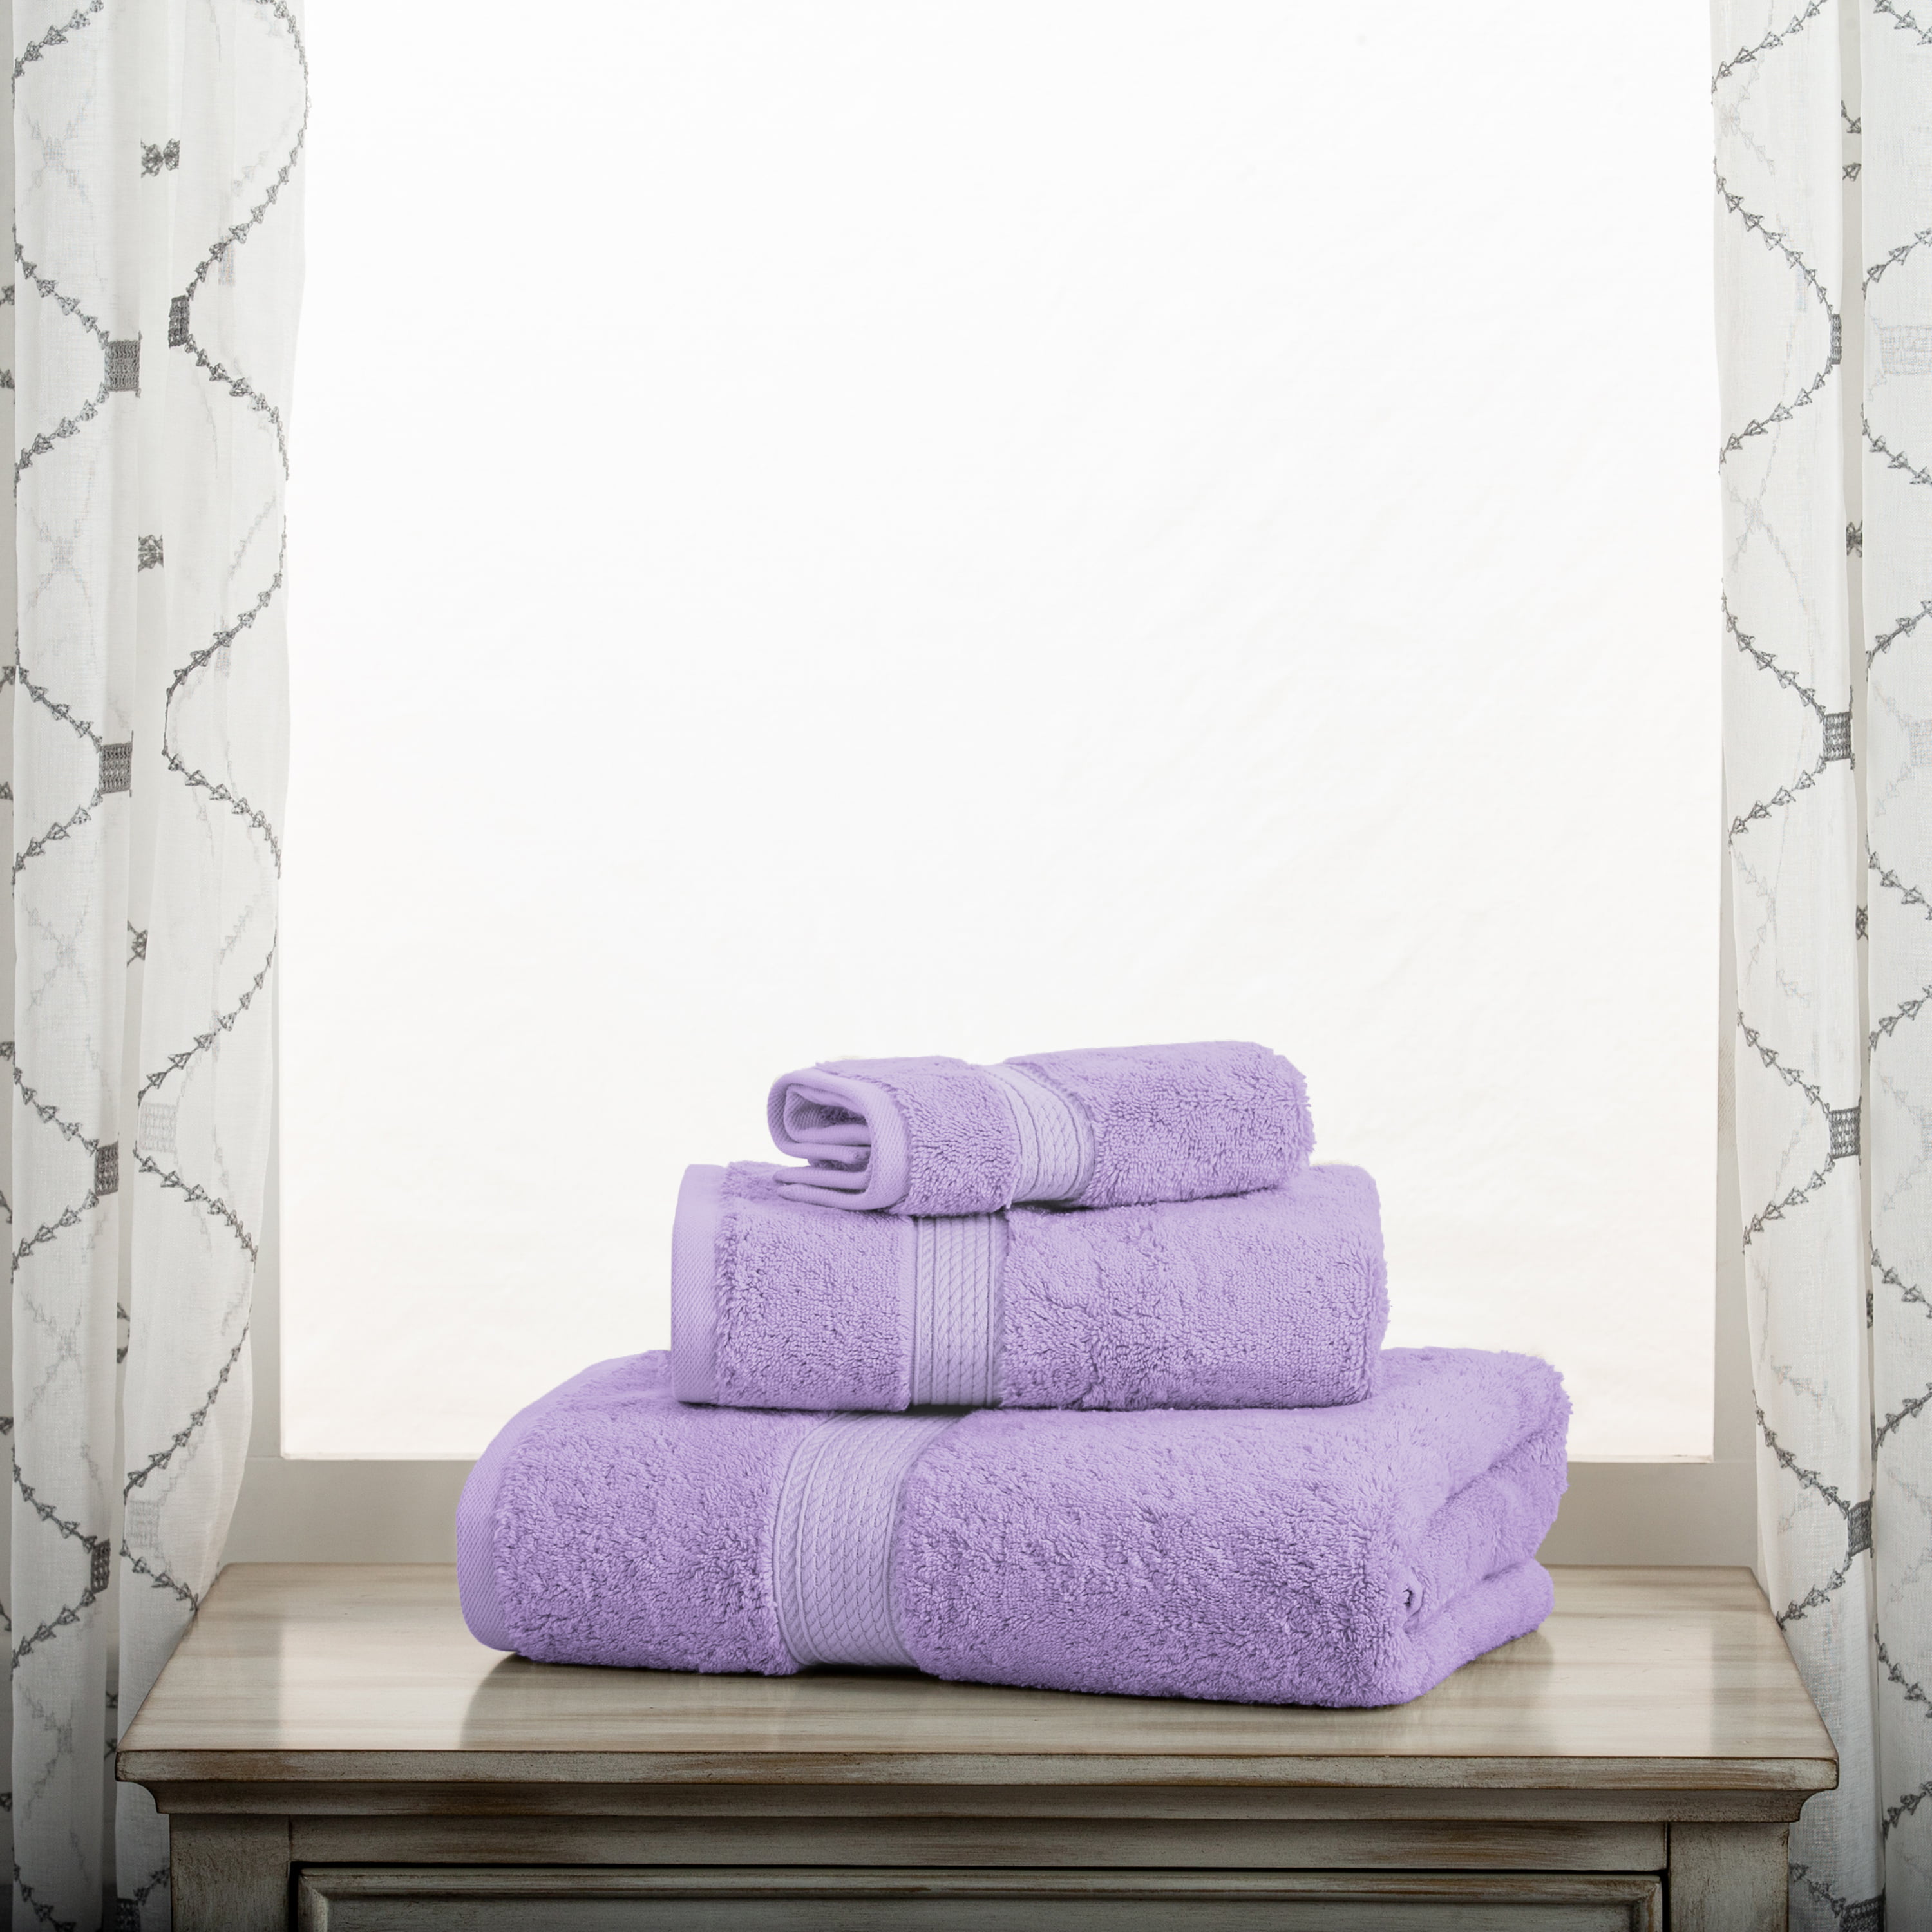 Body Bath & Shower Towel – Large 30×55 – NanoTowel